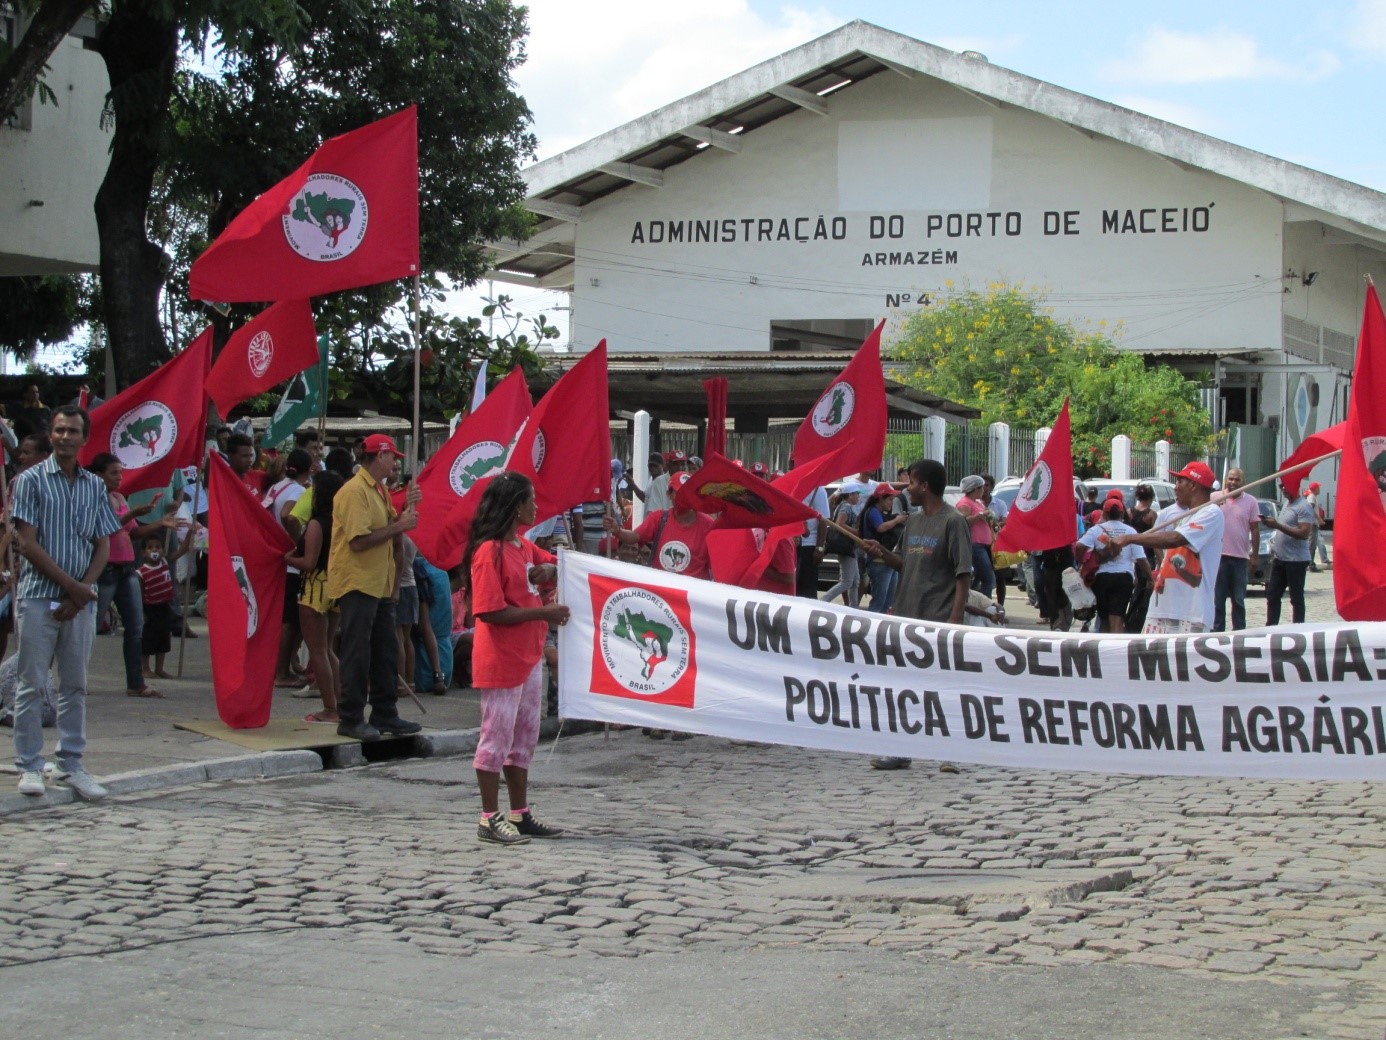 Manifestation of Landless Workers Brazil